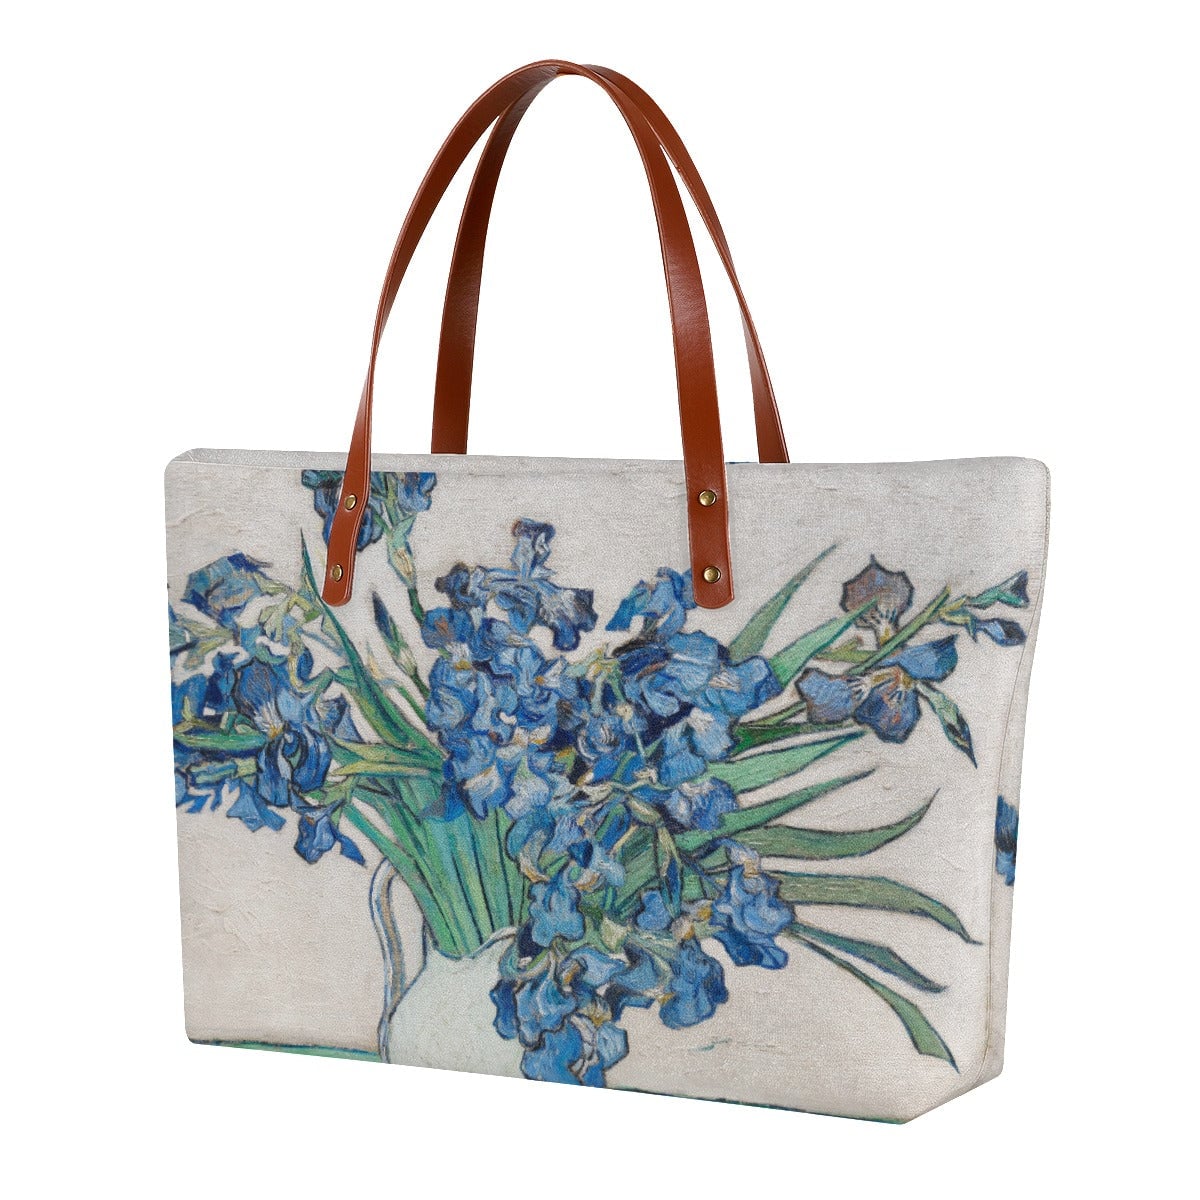 Vincent van Gogh’s Masterpiece Irises Tote Bag